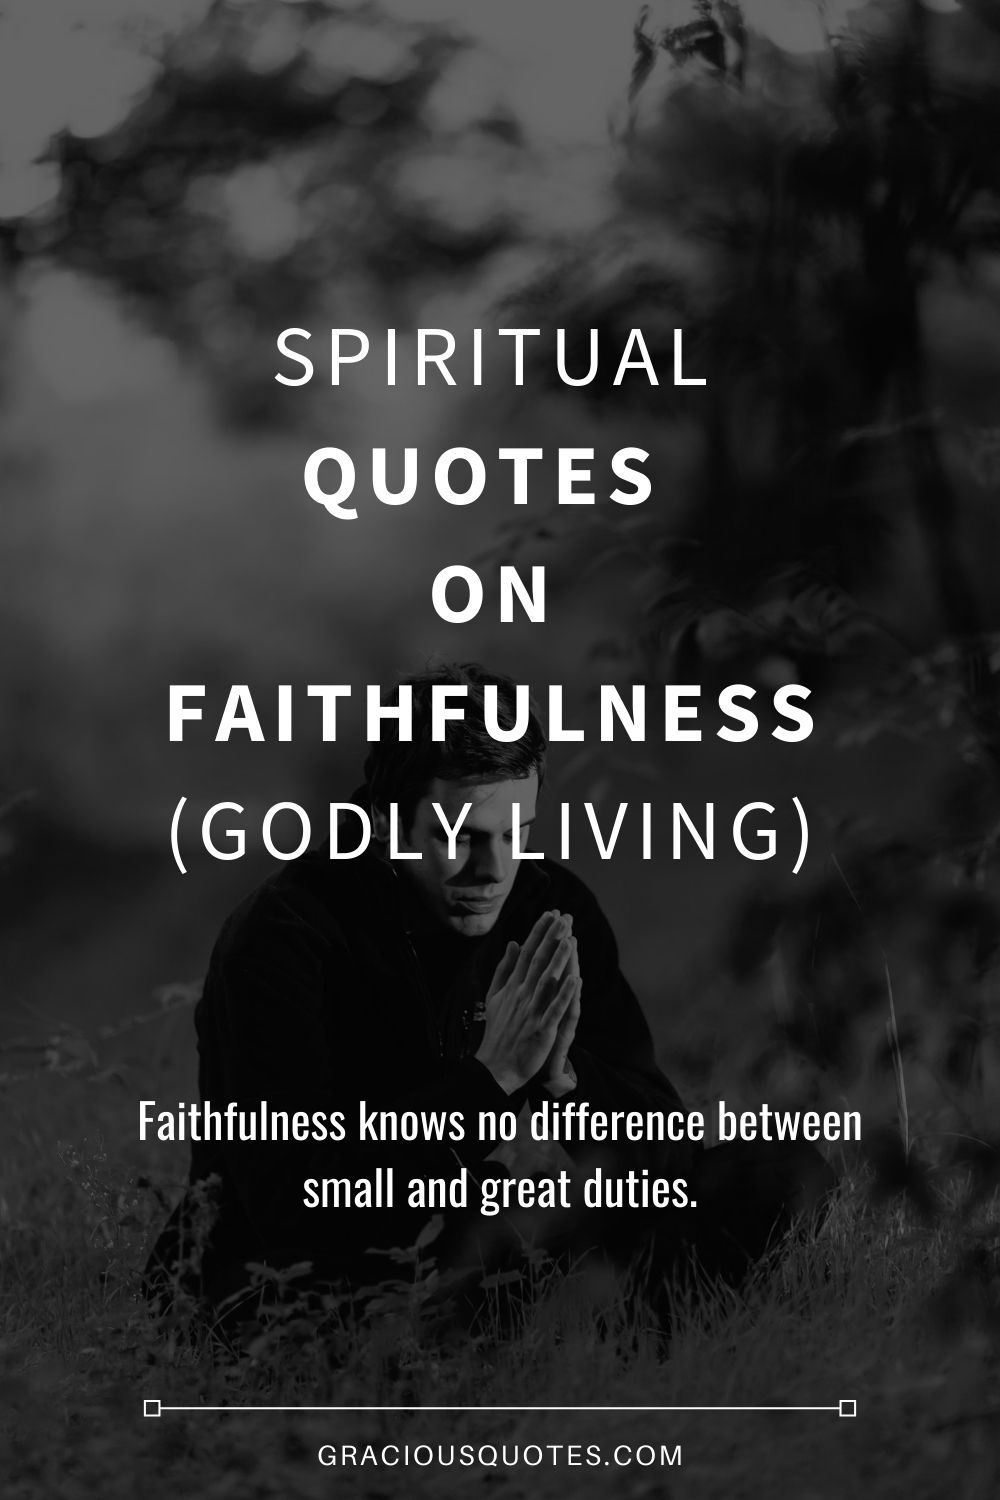 Spiritual Quotes on Faithfulness (GODLY LIVING) - Gracious Quotes